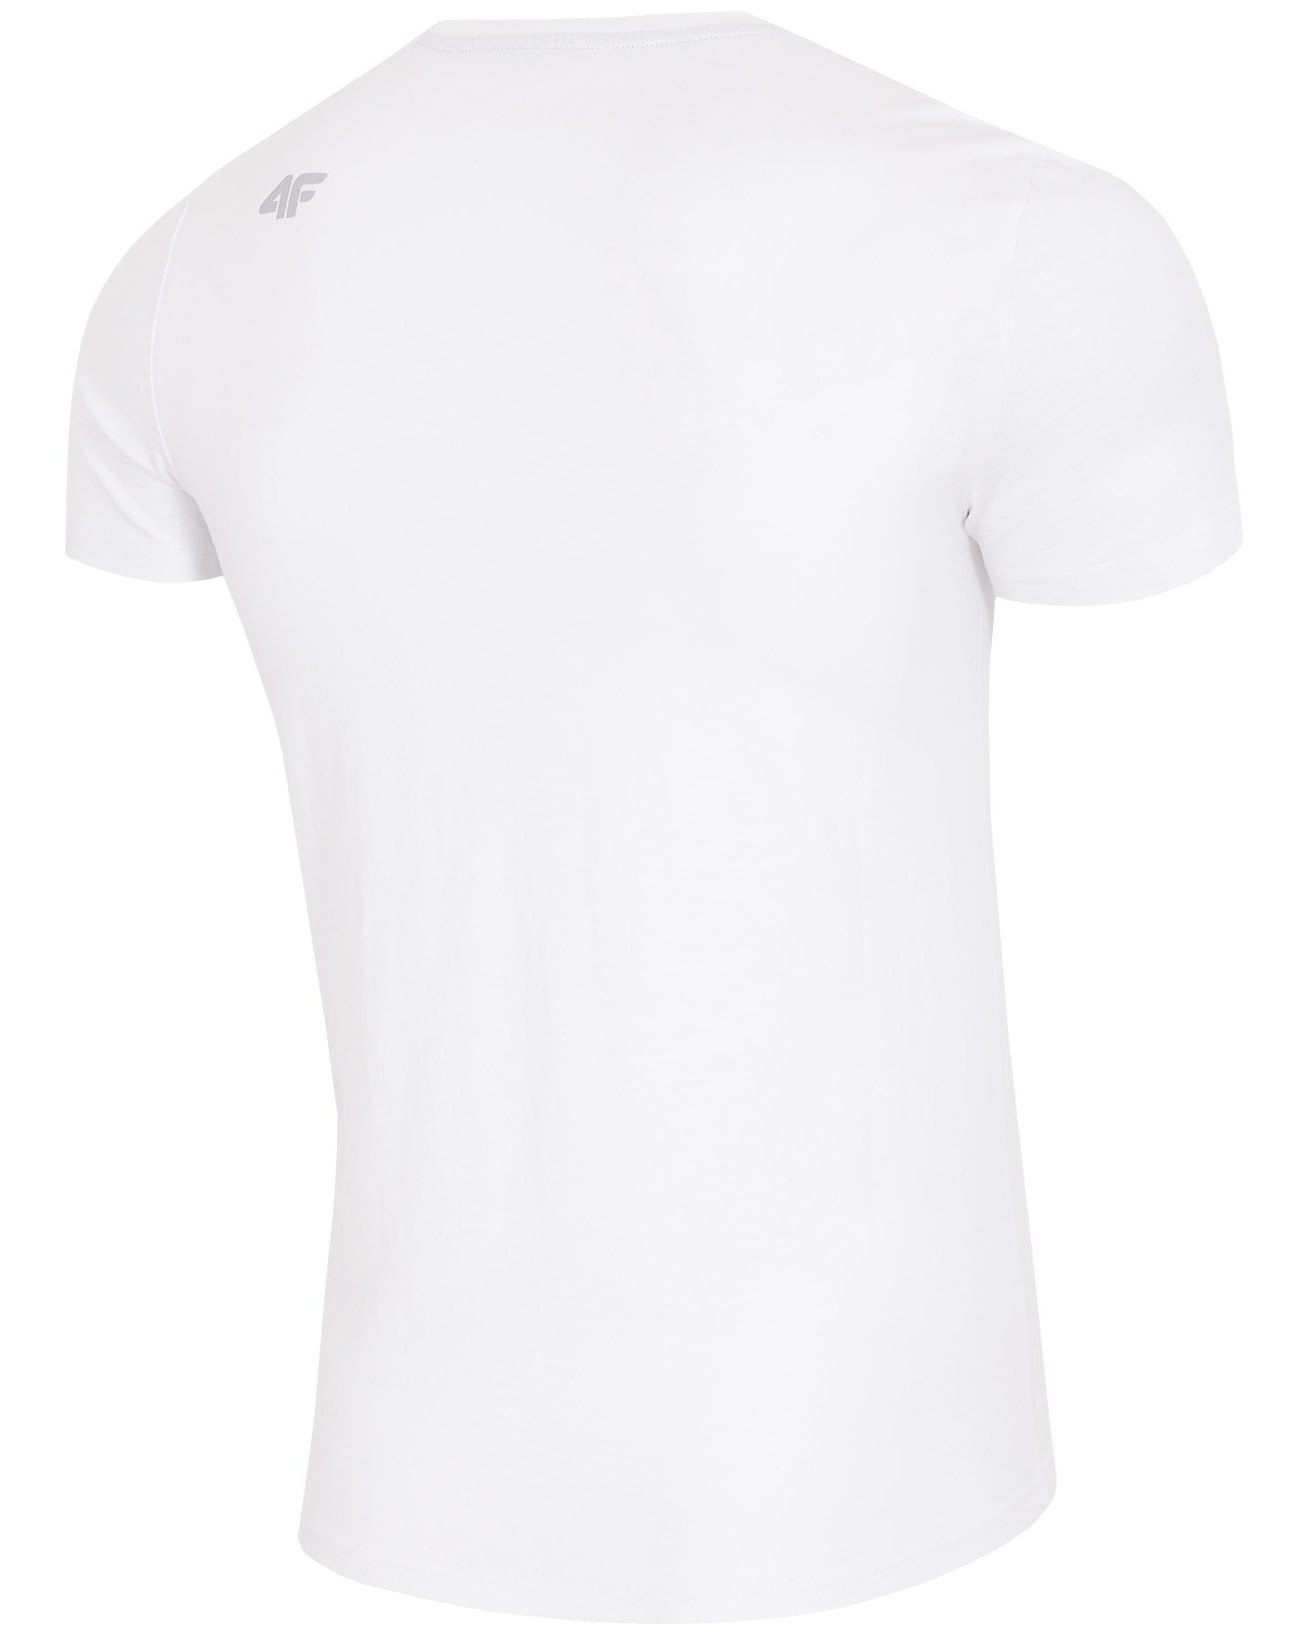 4F Man's T-Shirt - White